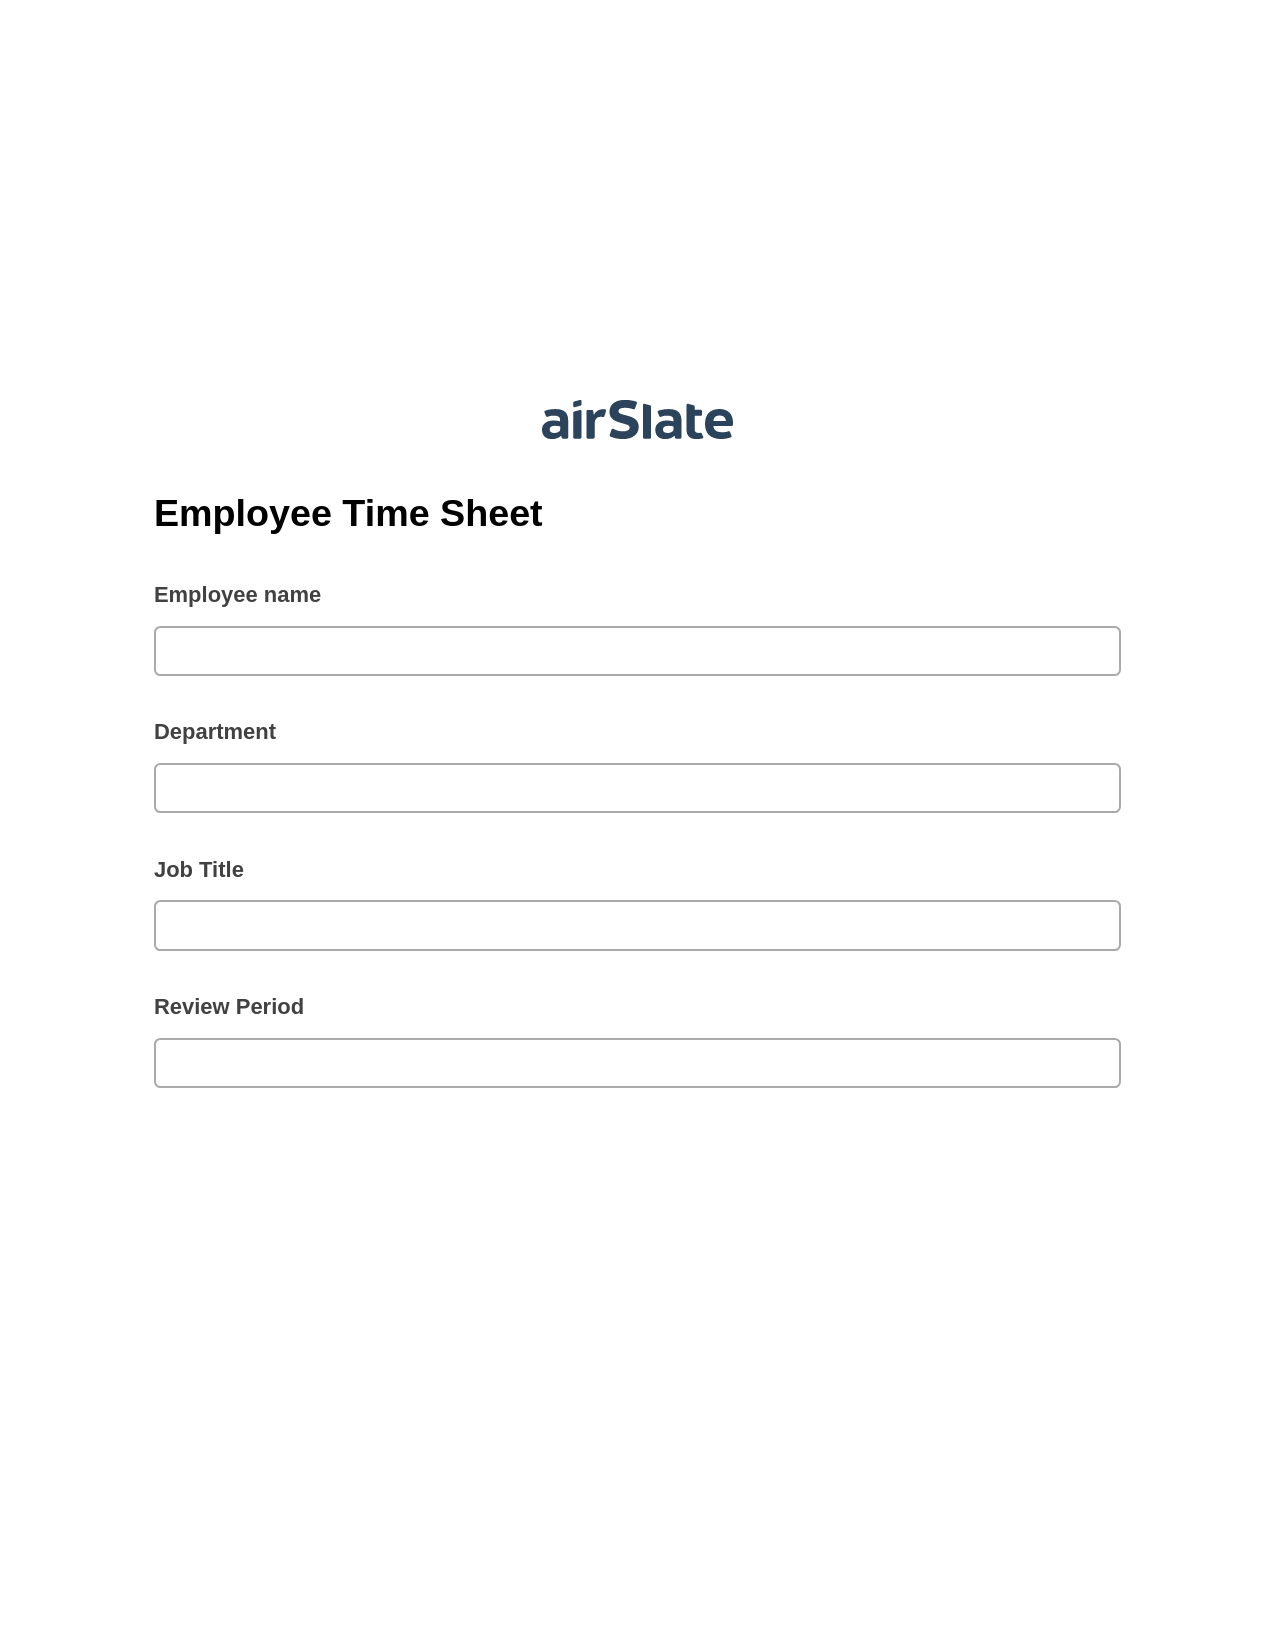 Multirole Employee Time Sheet Pre-fill Dropdowns from Smartsheet Bot, Update Audit Trail Bot, Export to Smartsheet